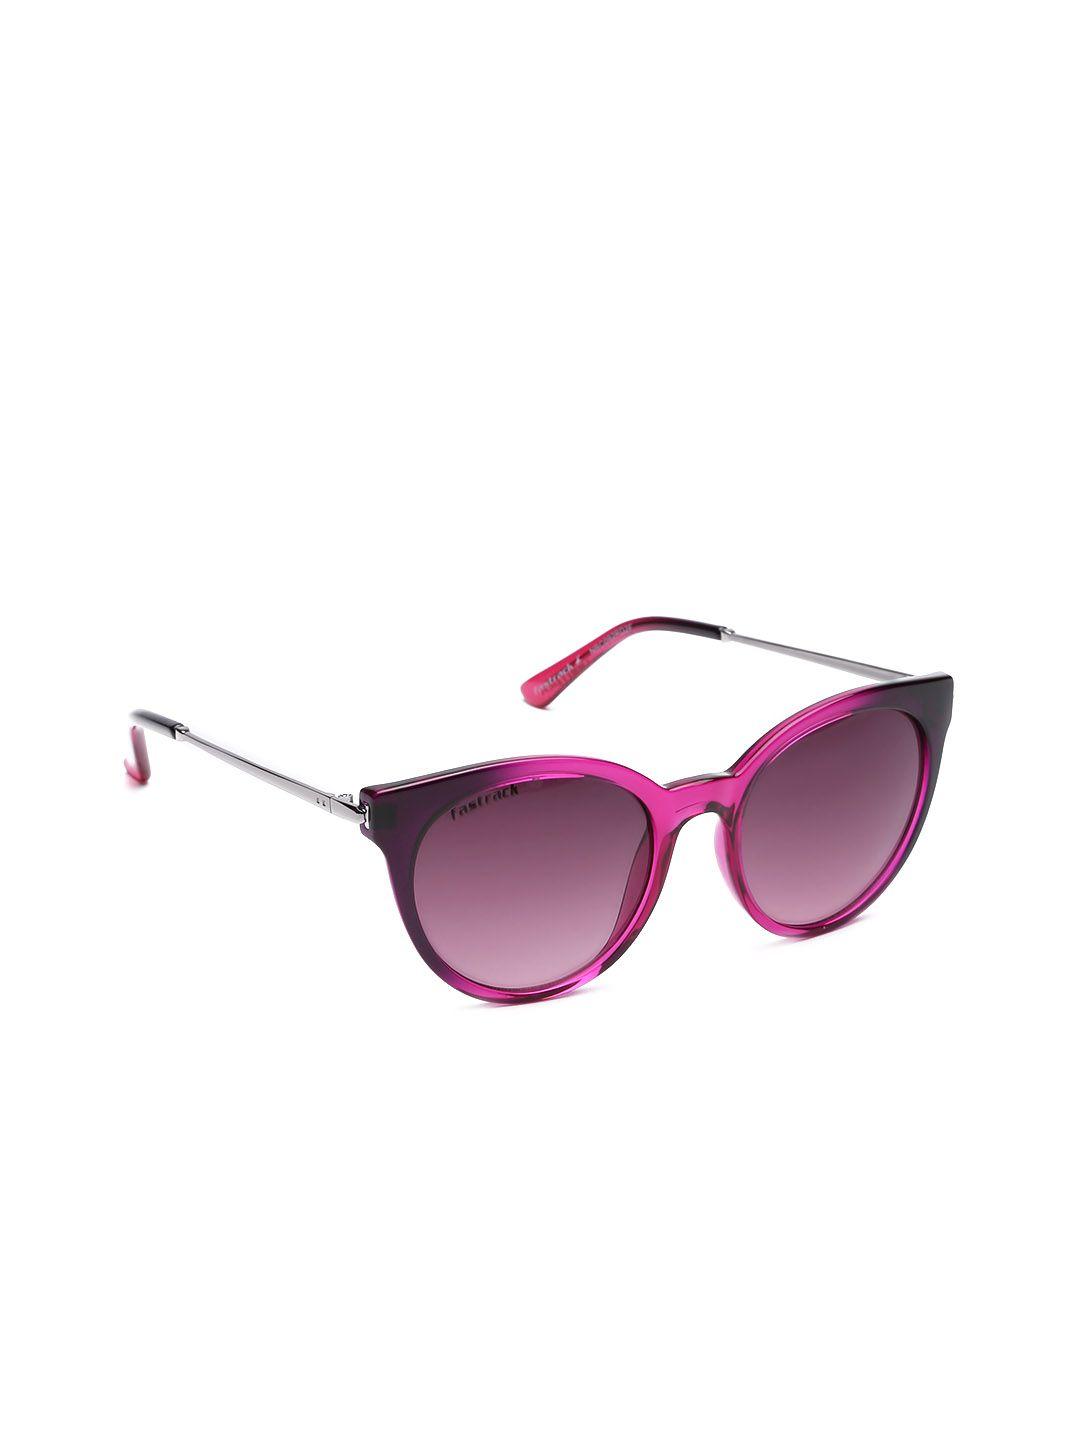 fastrack women cateye sunglasses nbc092rd2f